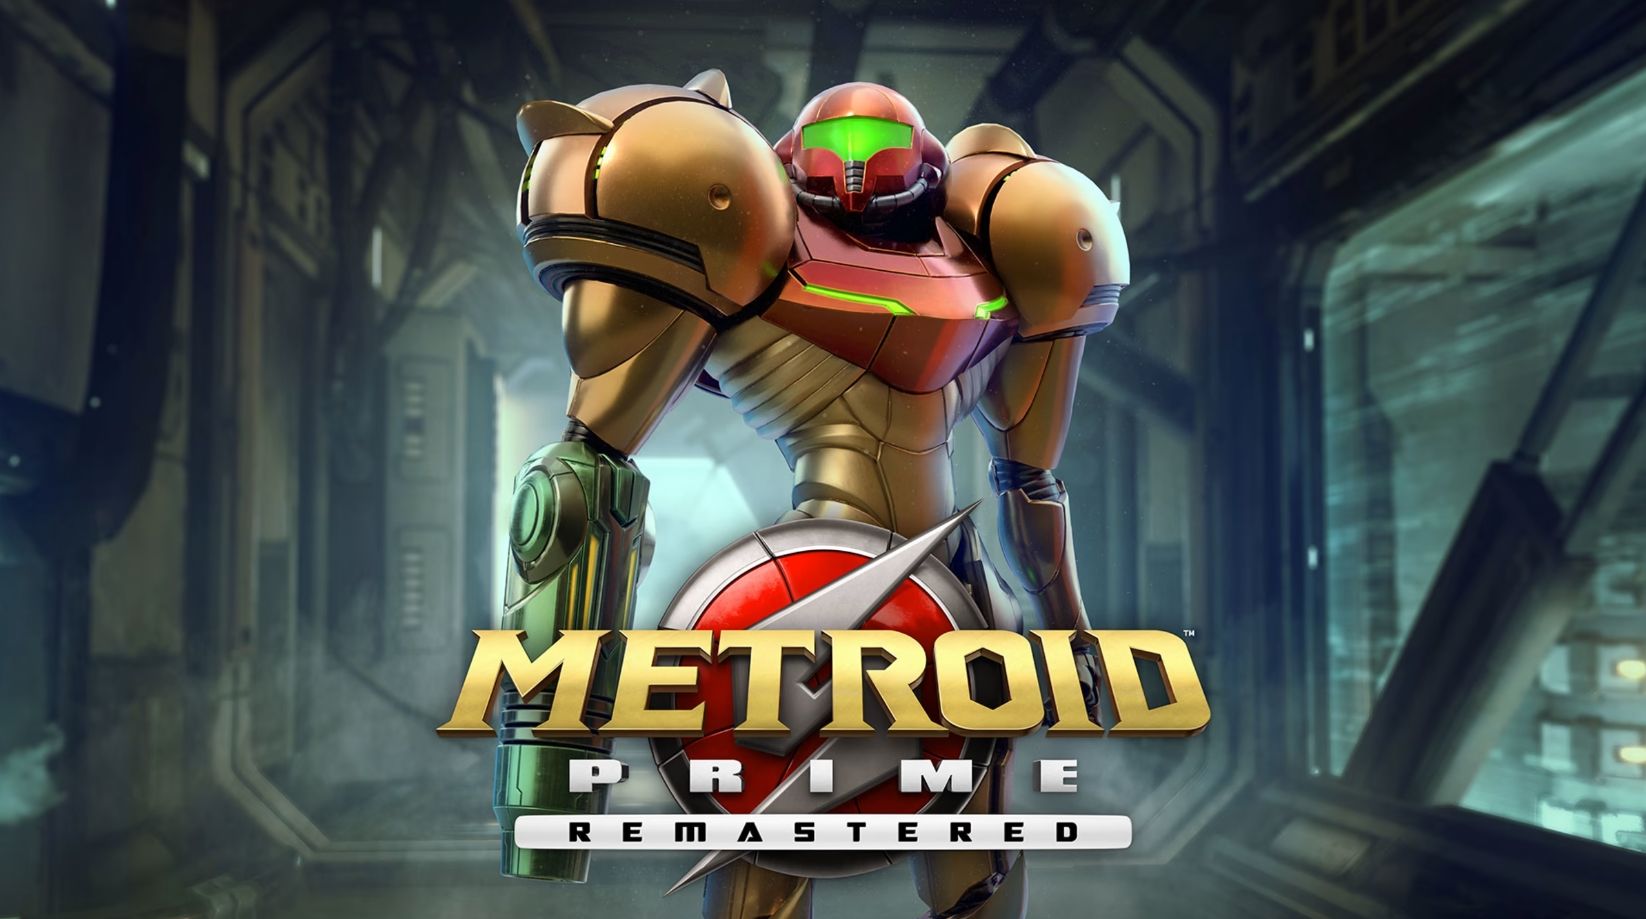 Metroid Prime geremasterde superraketten